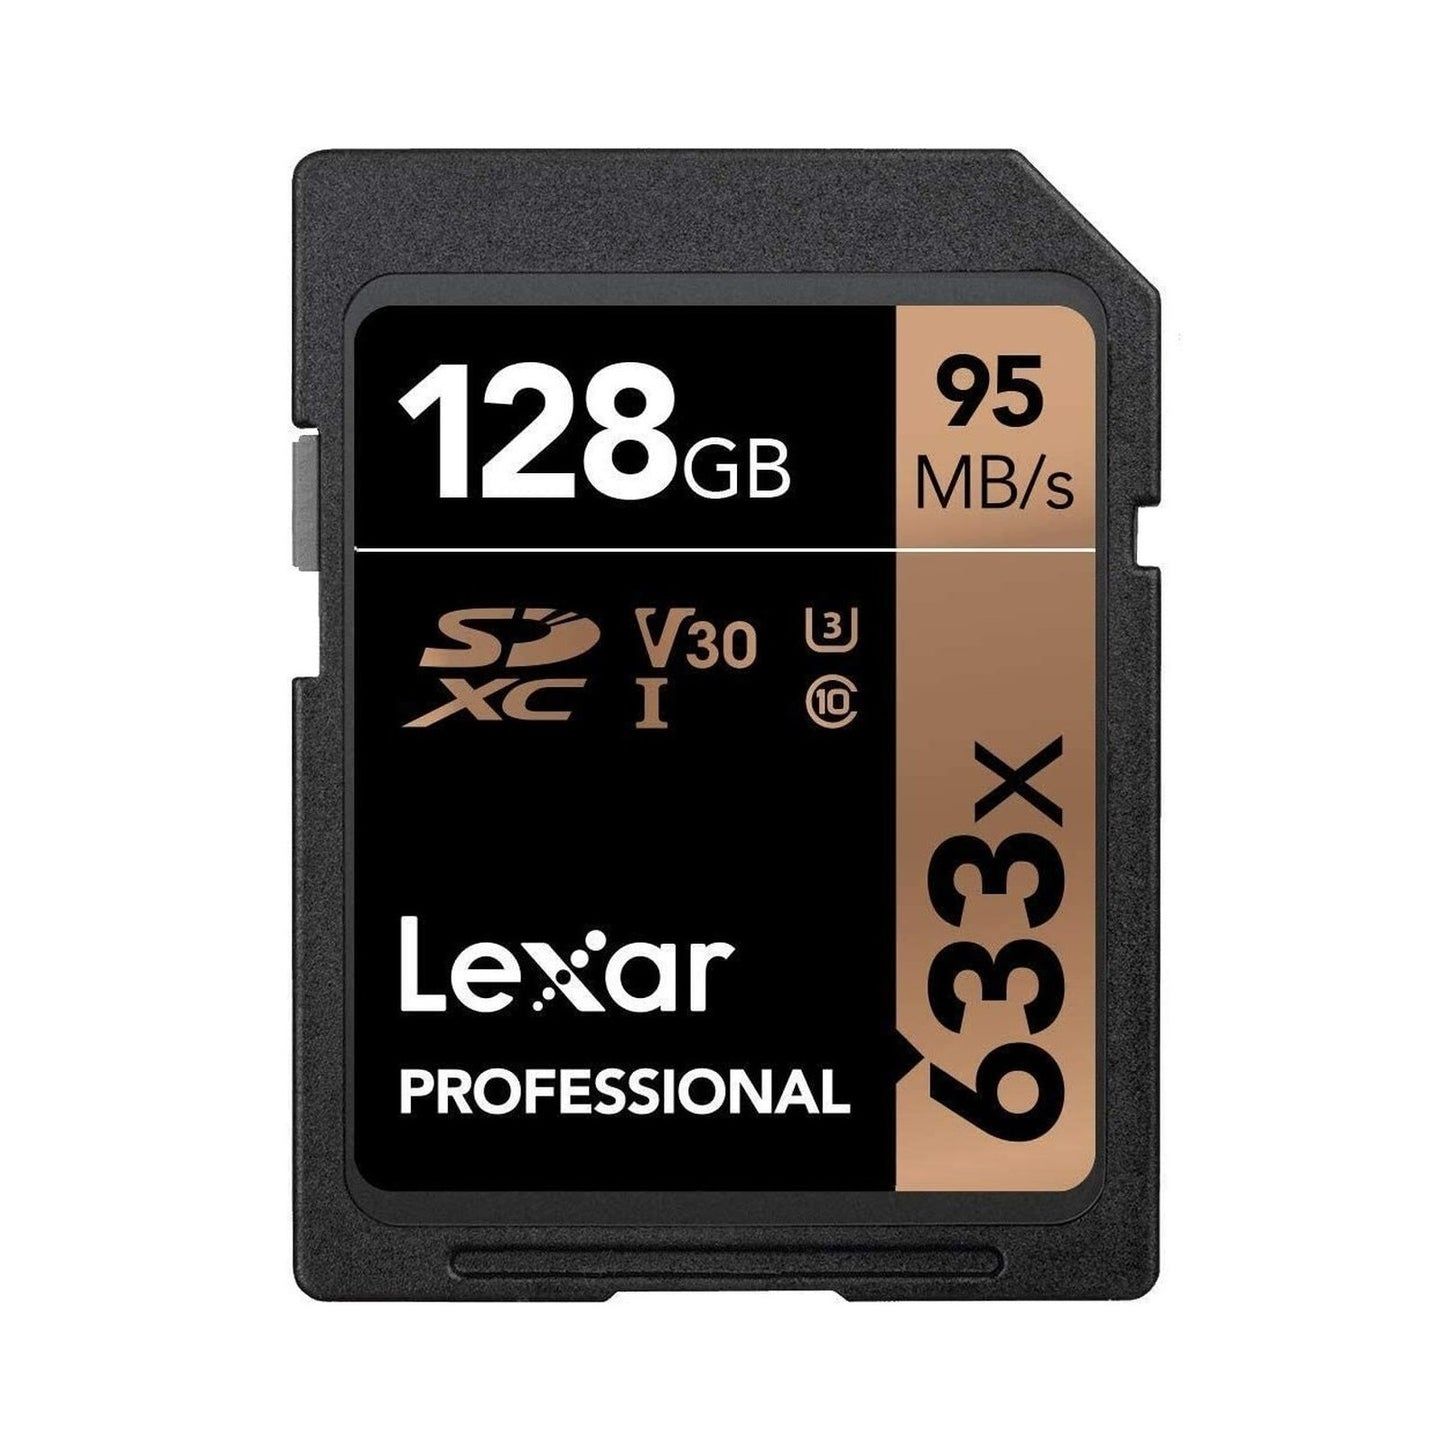 Lexar Professional 128GB SDXC 95MB/s SD Camera Memory TF Card 4K Video DSLR